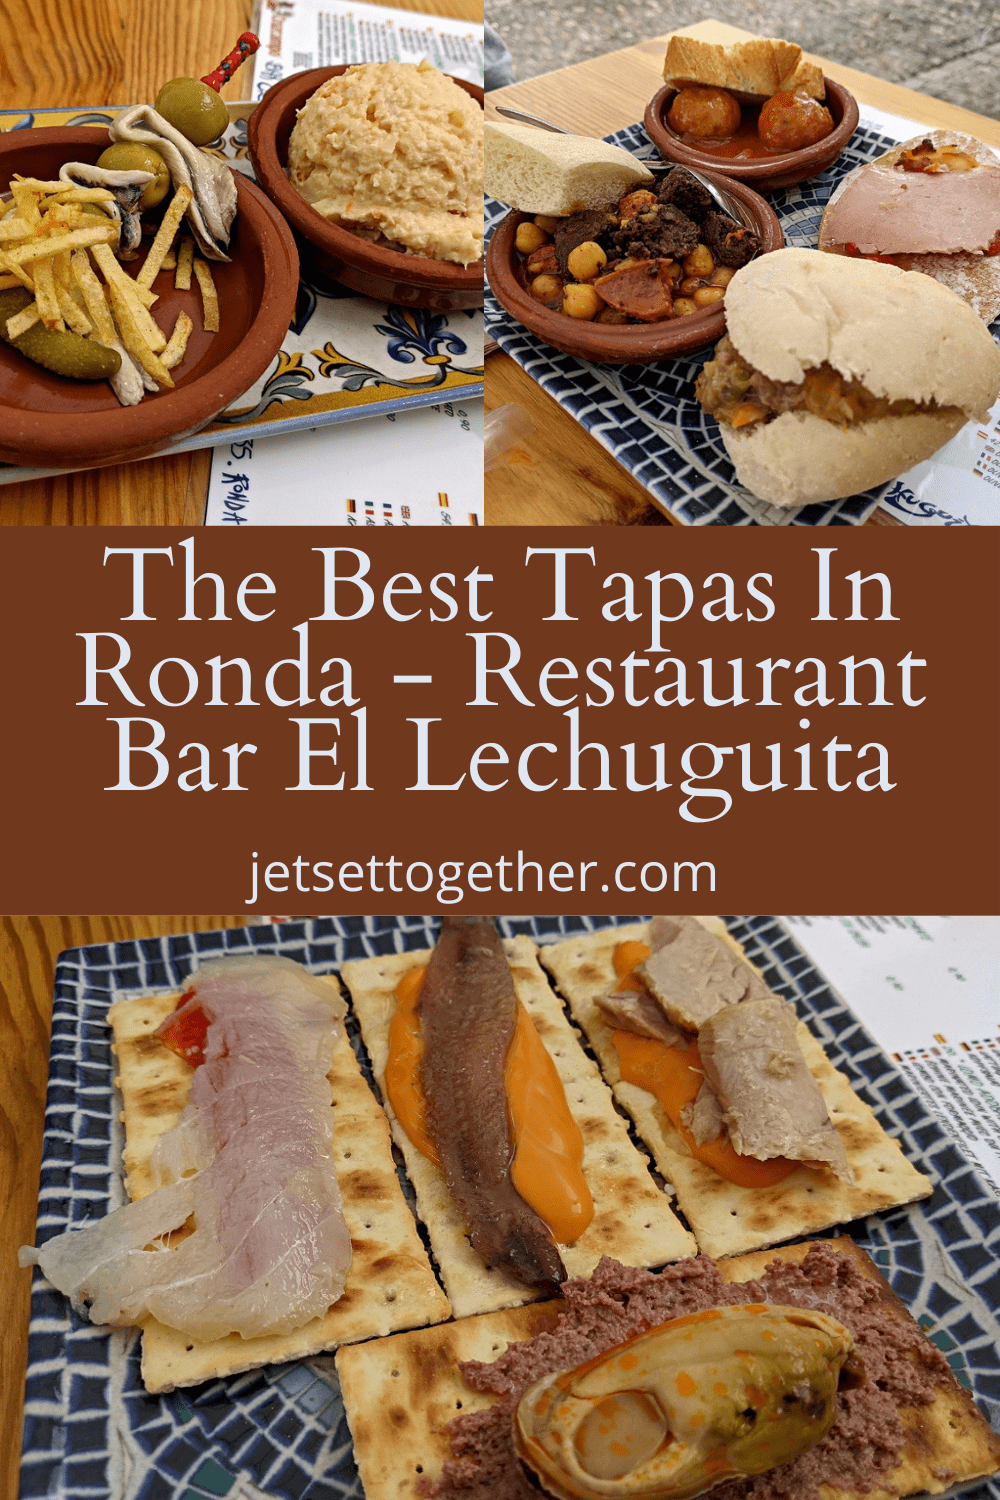 The Best Tapas In Ronda - Restaurant Bar El Lechuguita